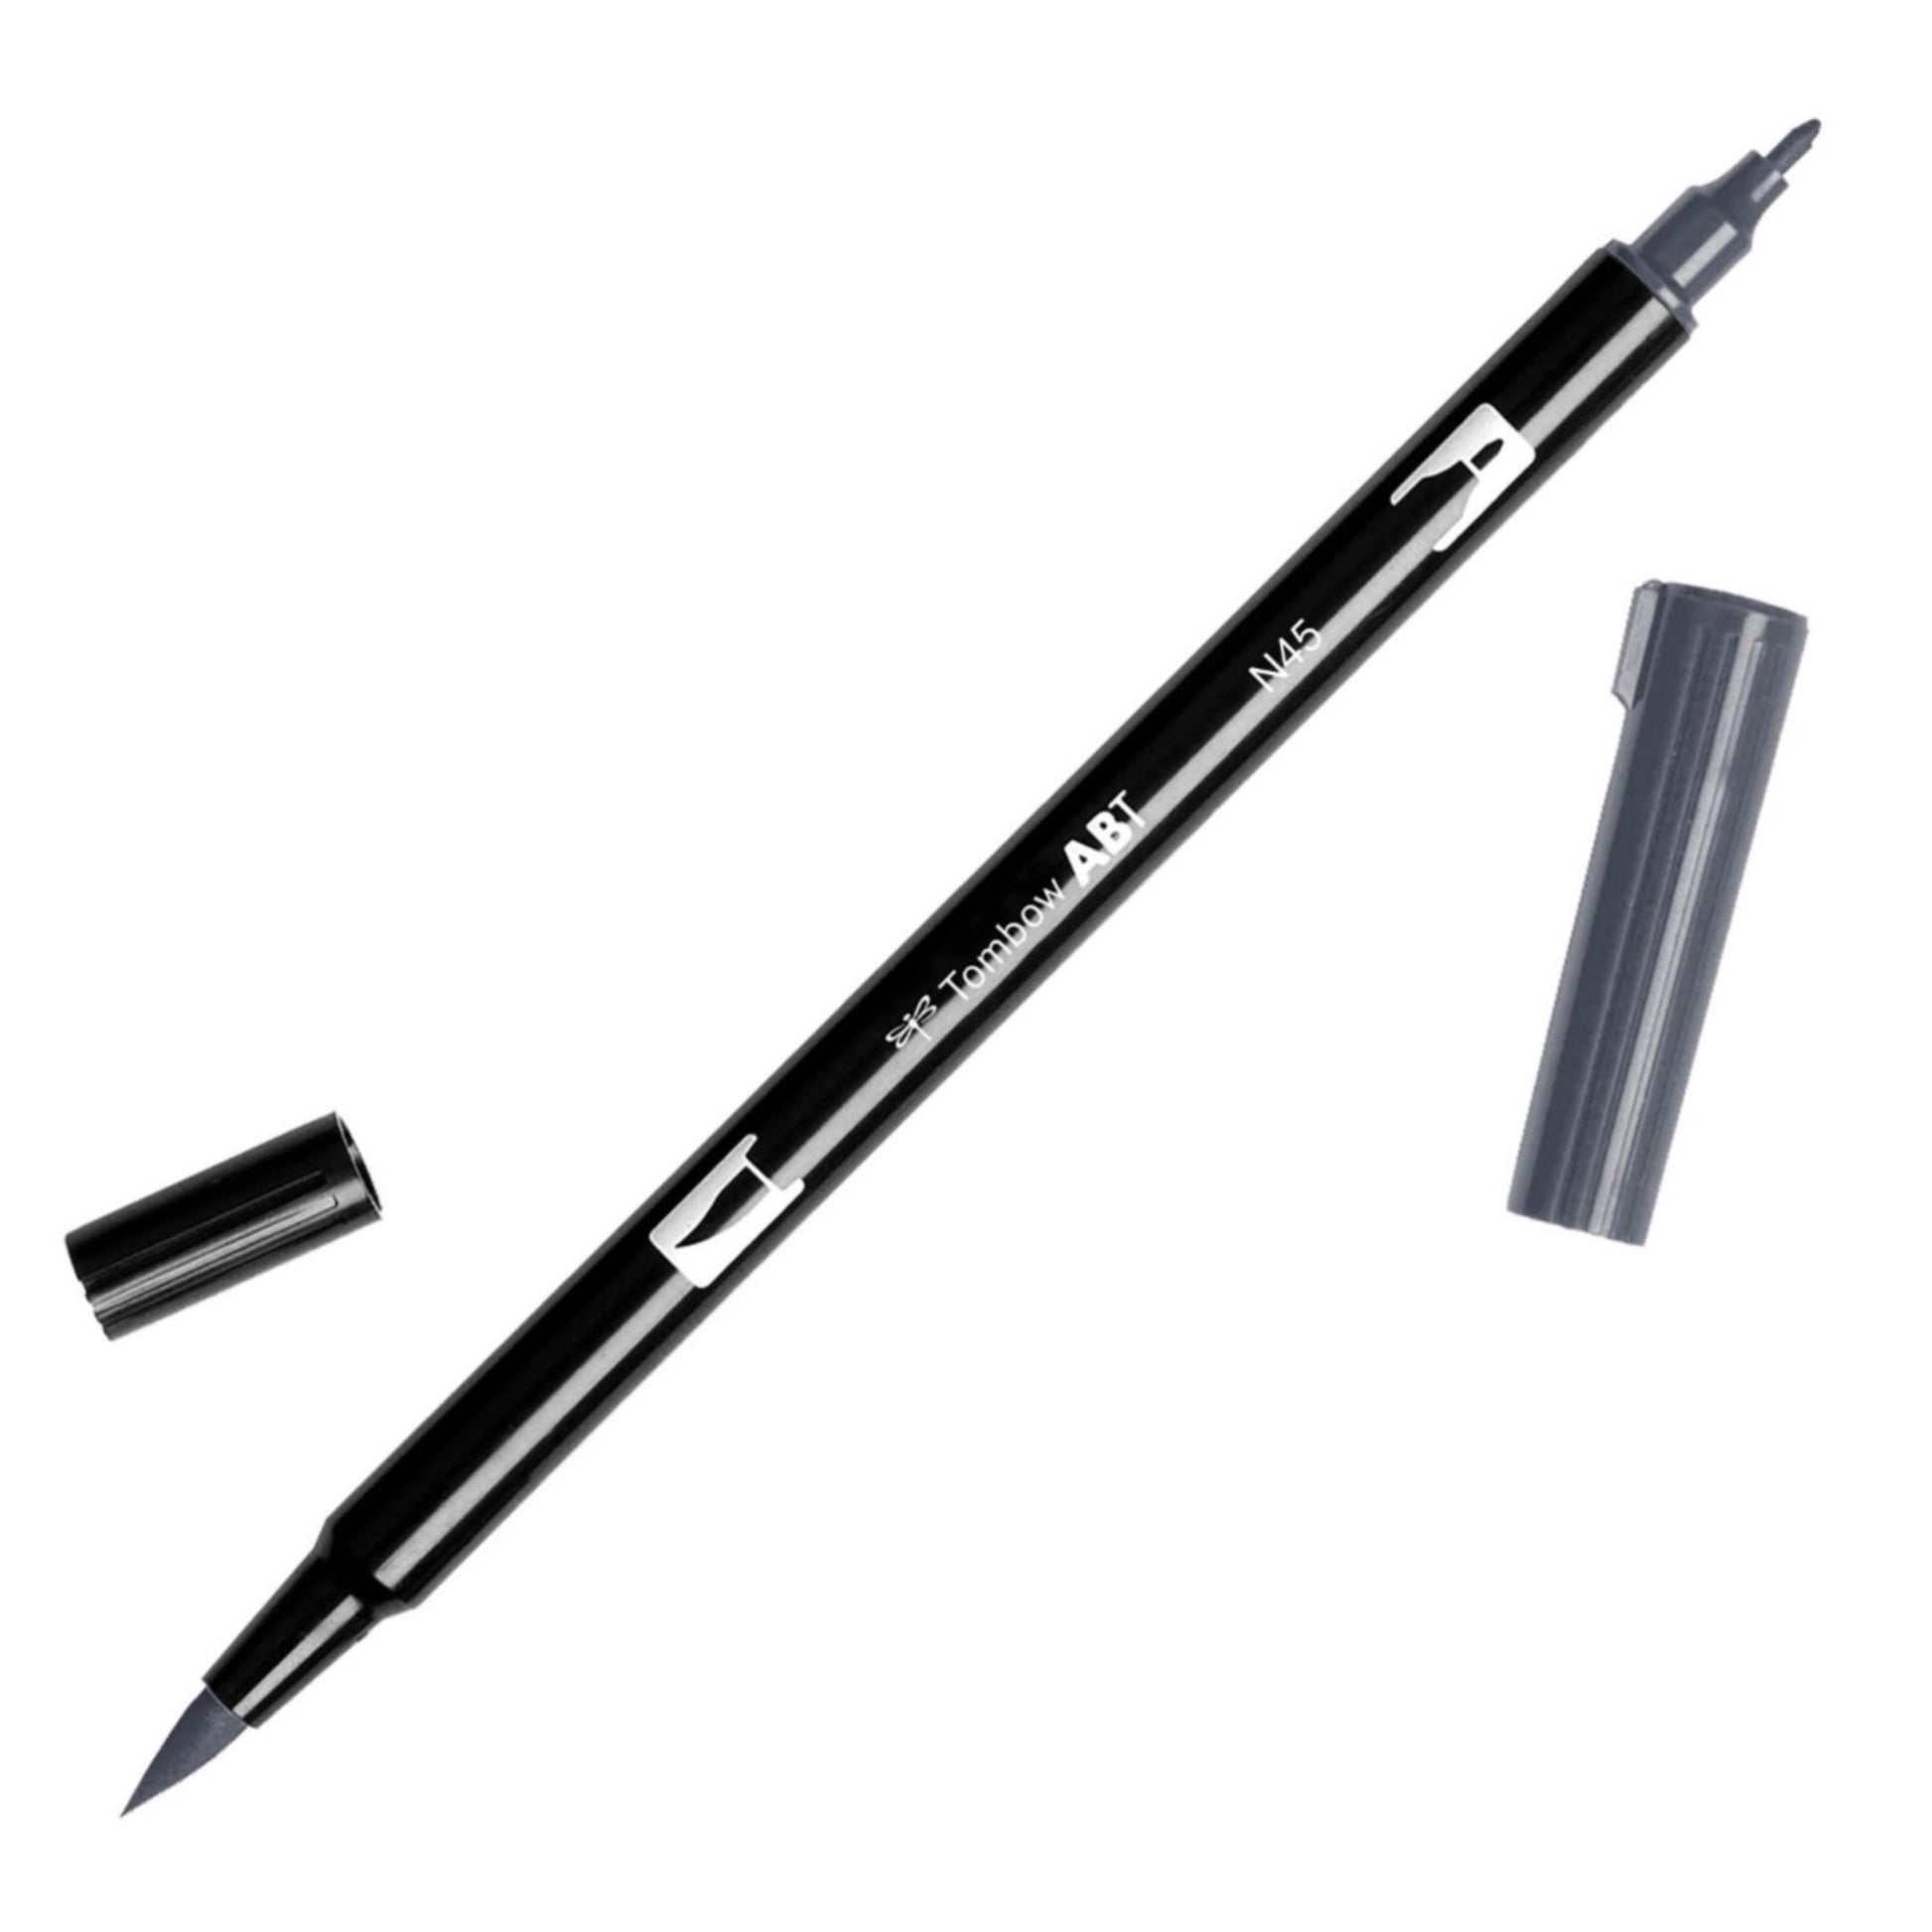 Tombow Dual Brush Pens- Nineties Set of 10